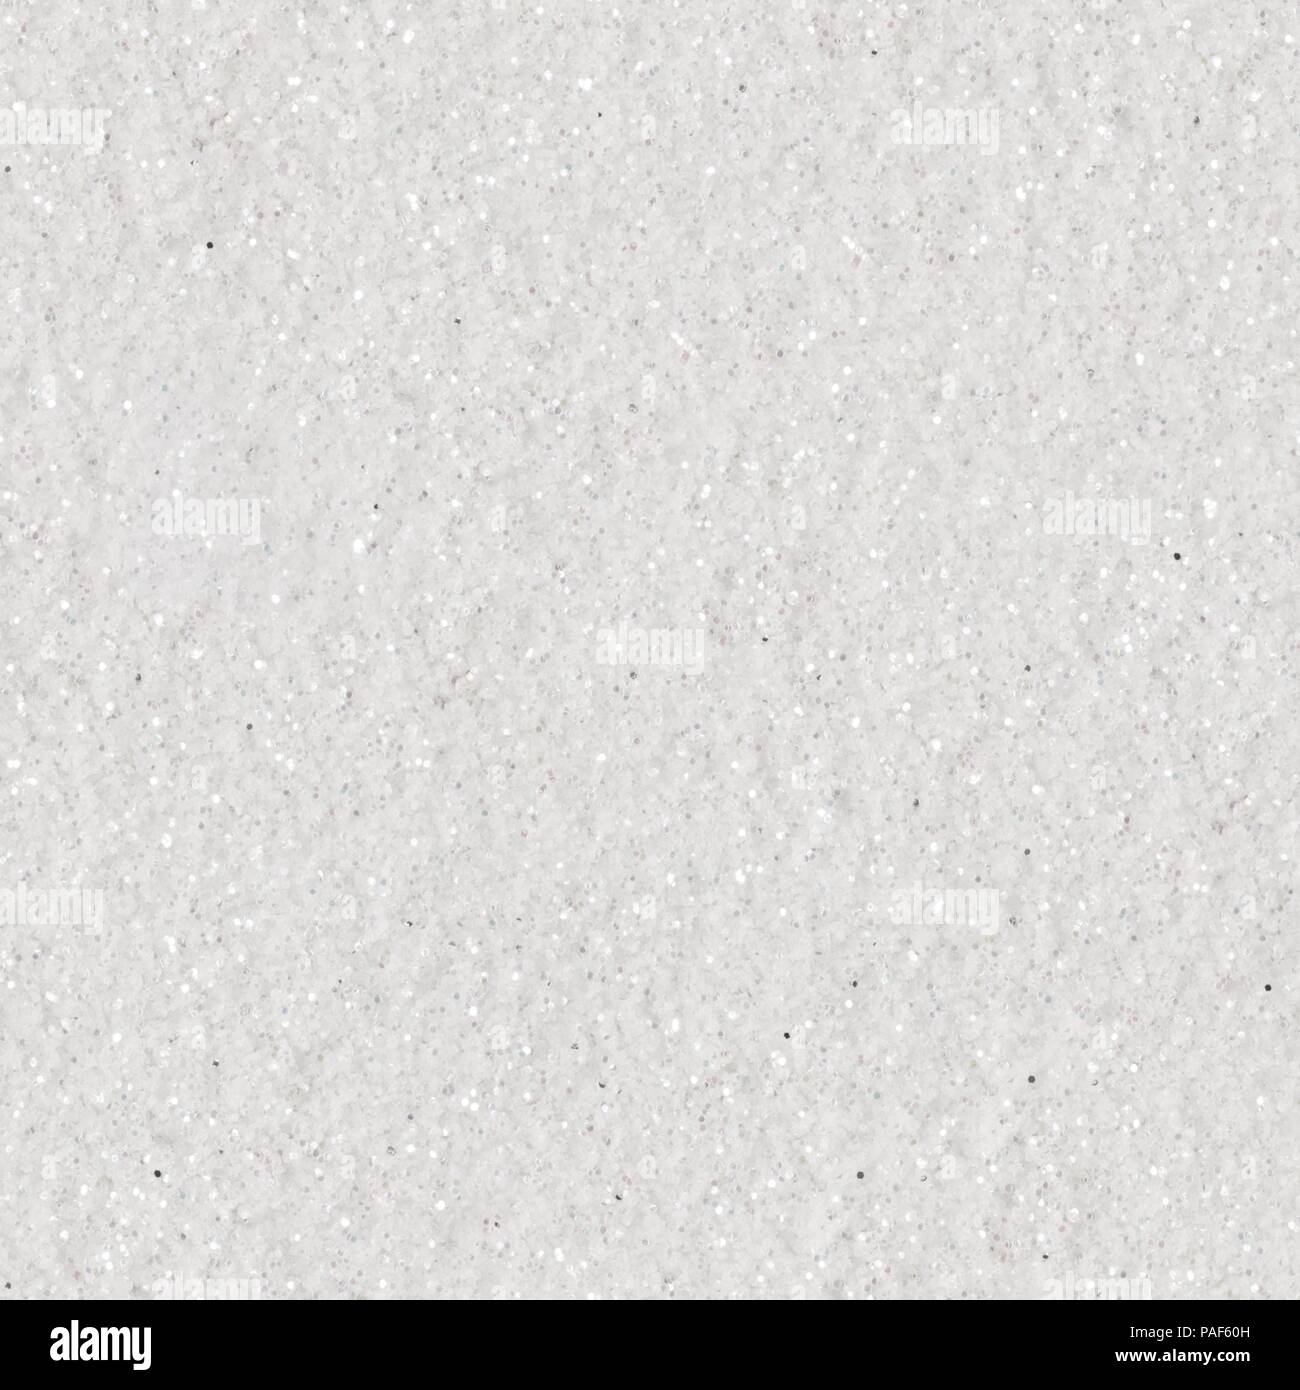 White glitter. Seamless square texture Stock Photo Alamy